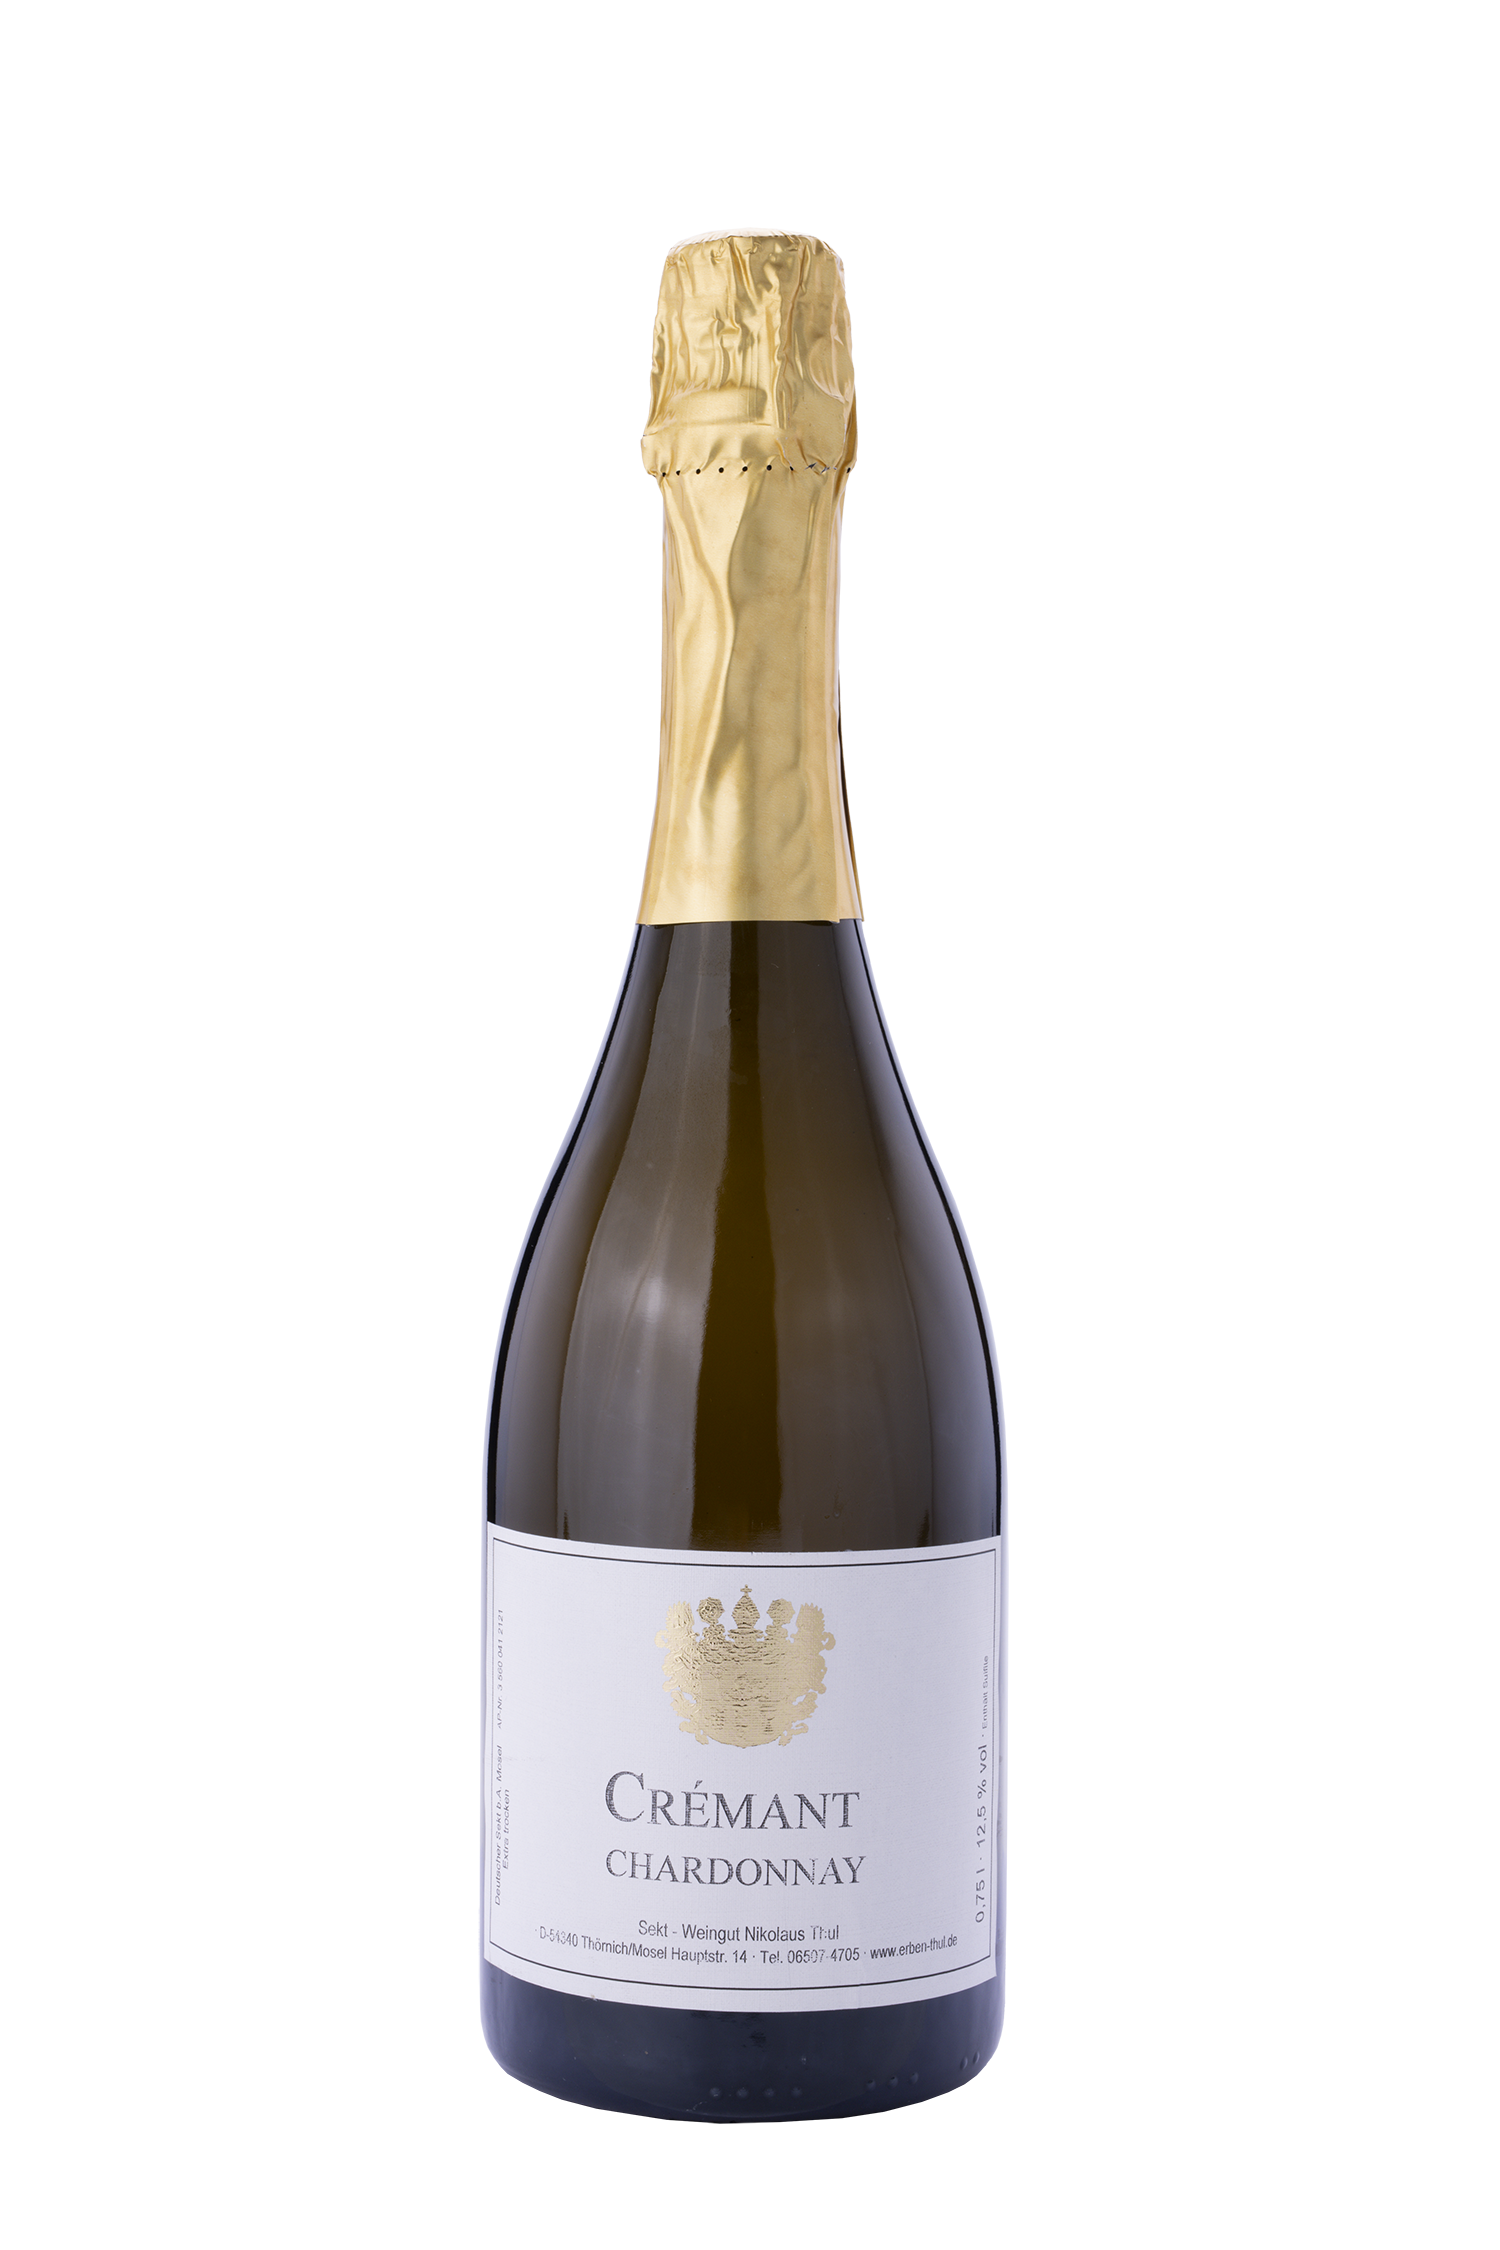 Crémant Chardonnay - Nikolaus Thul